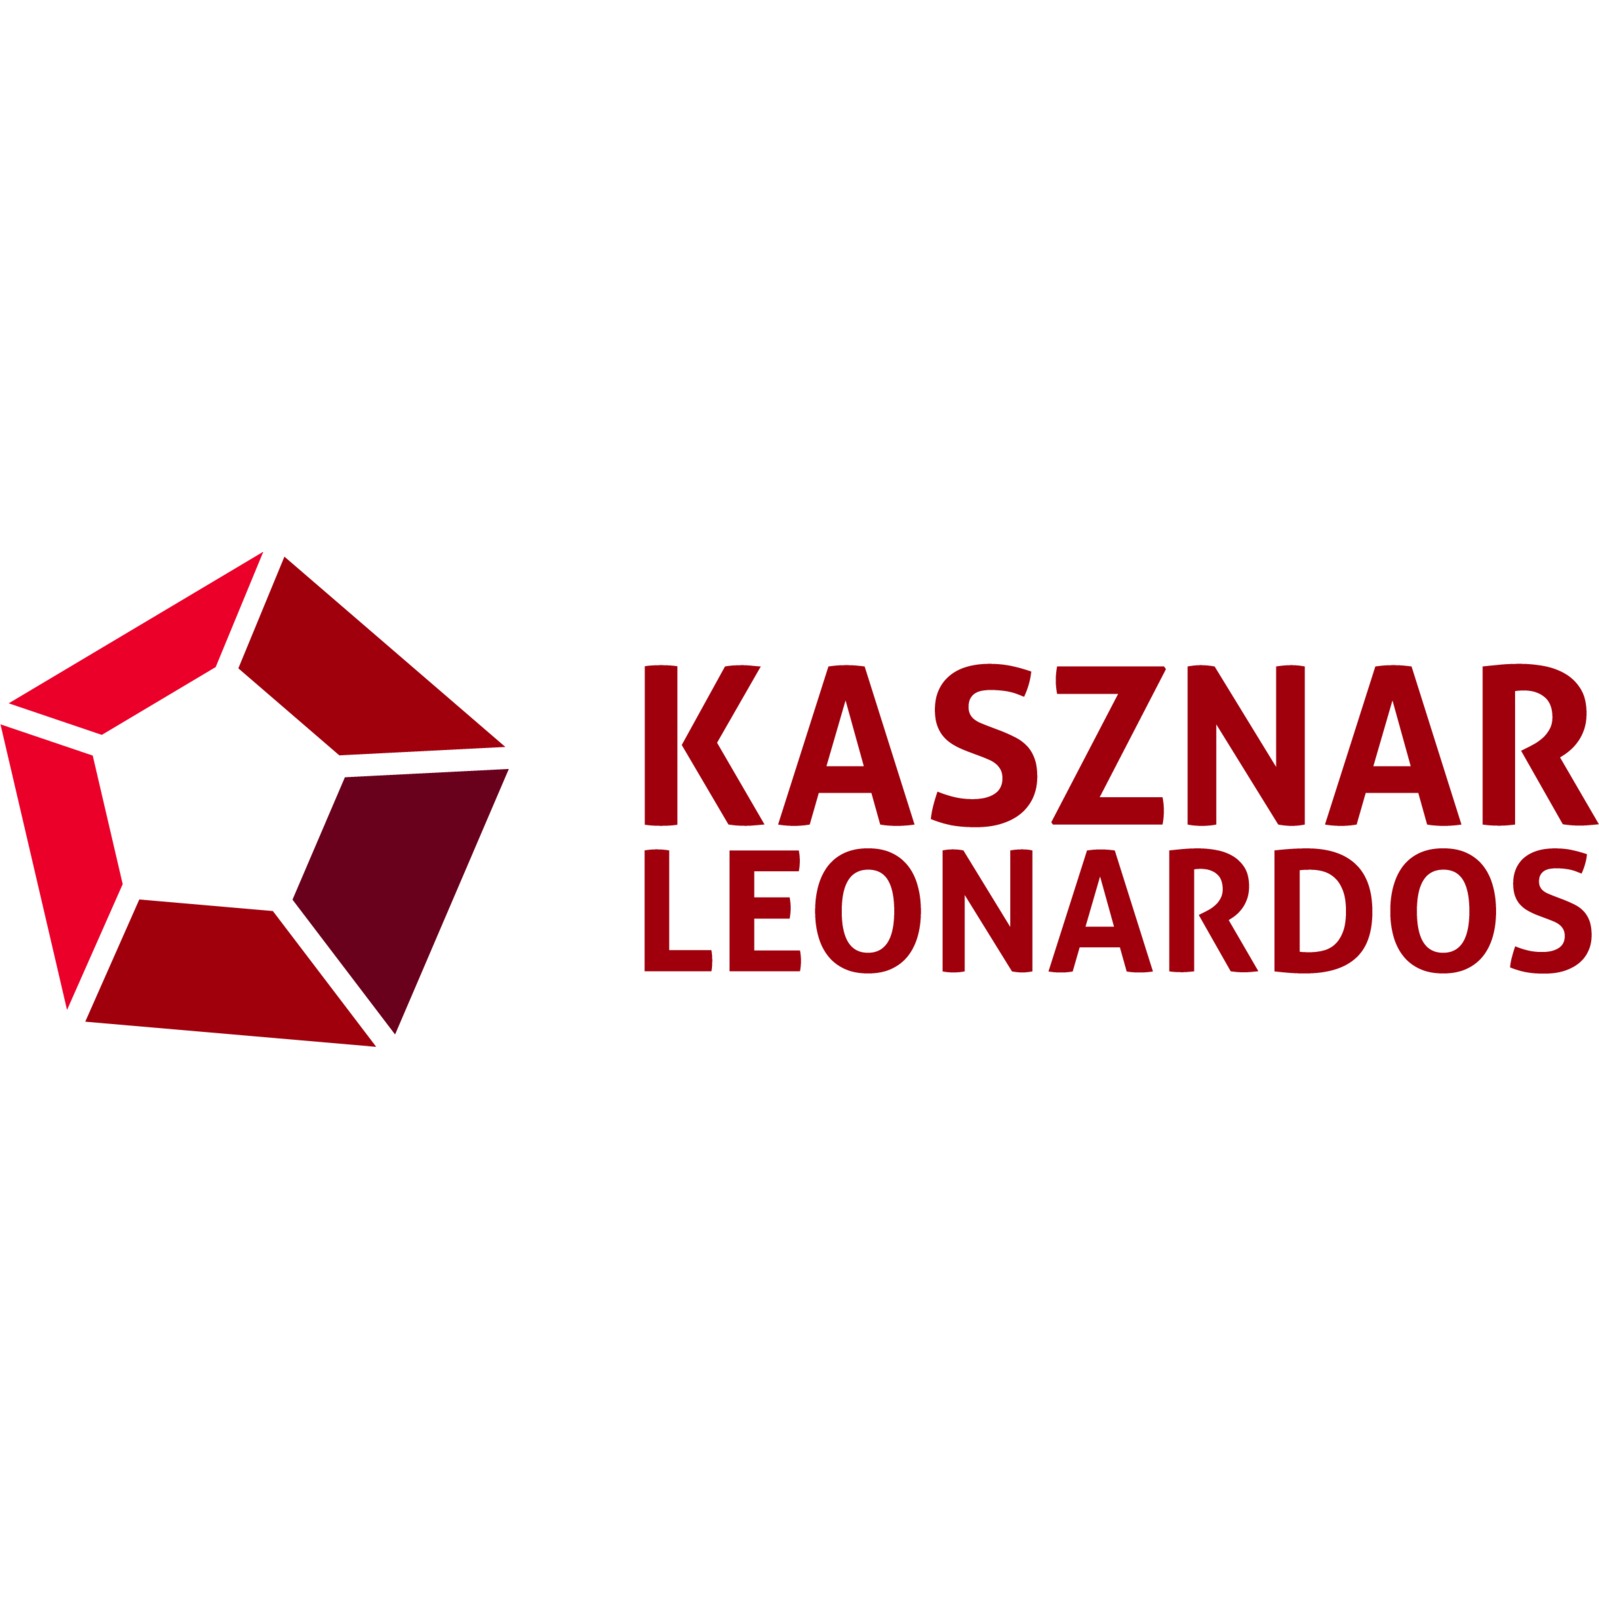 Kasznar Leonardos - Intellectual Property